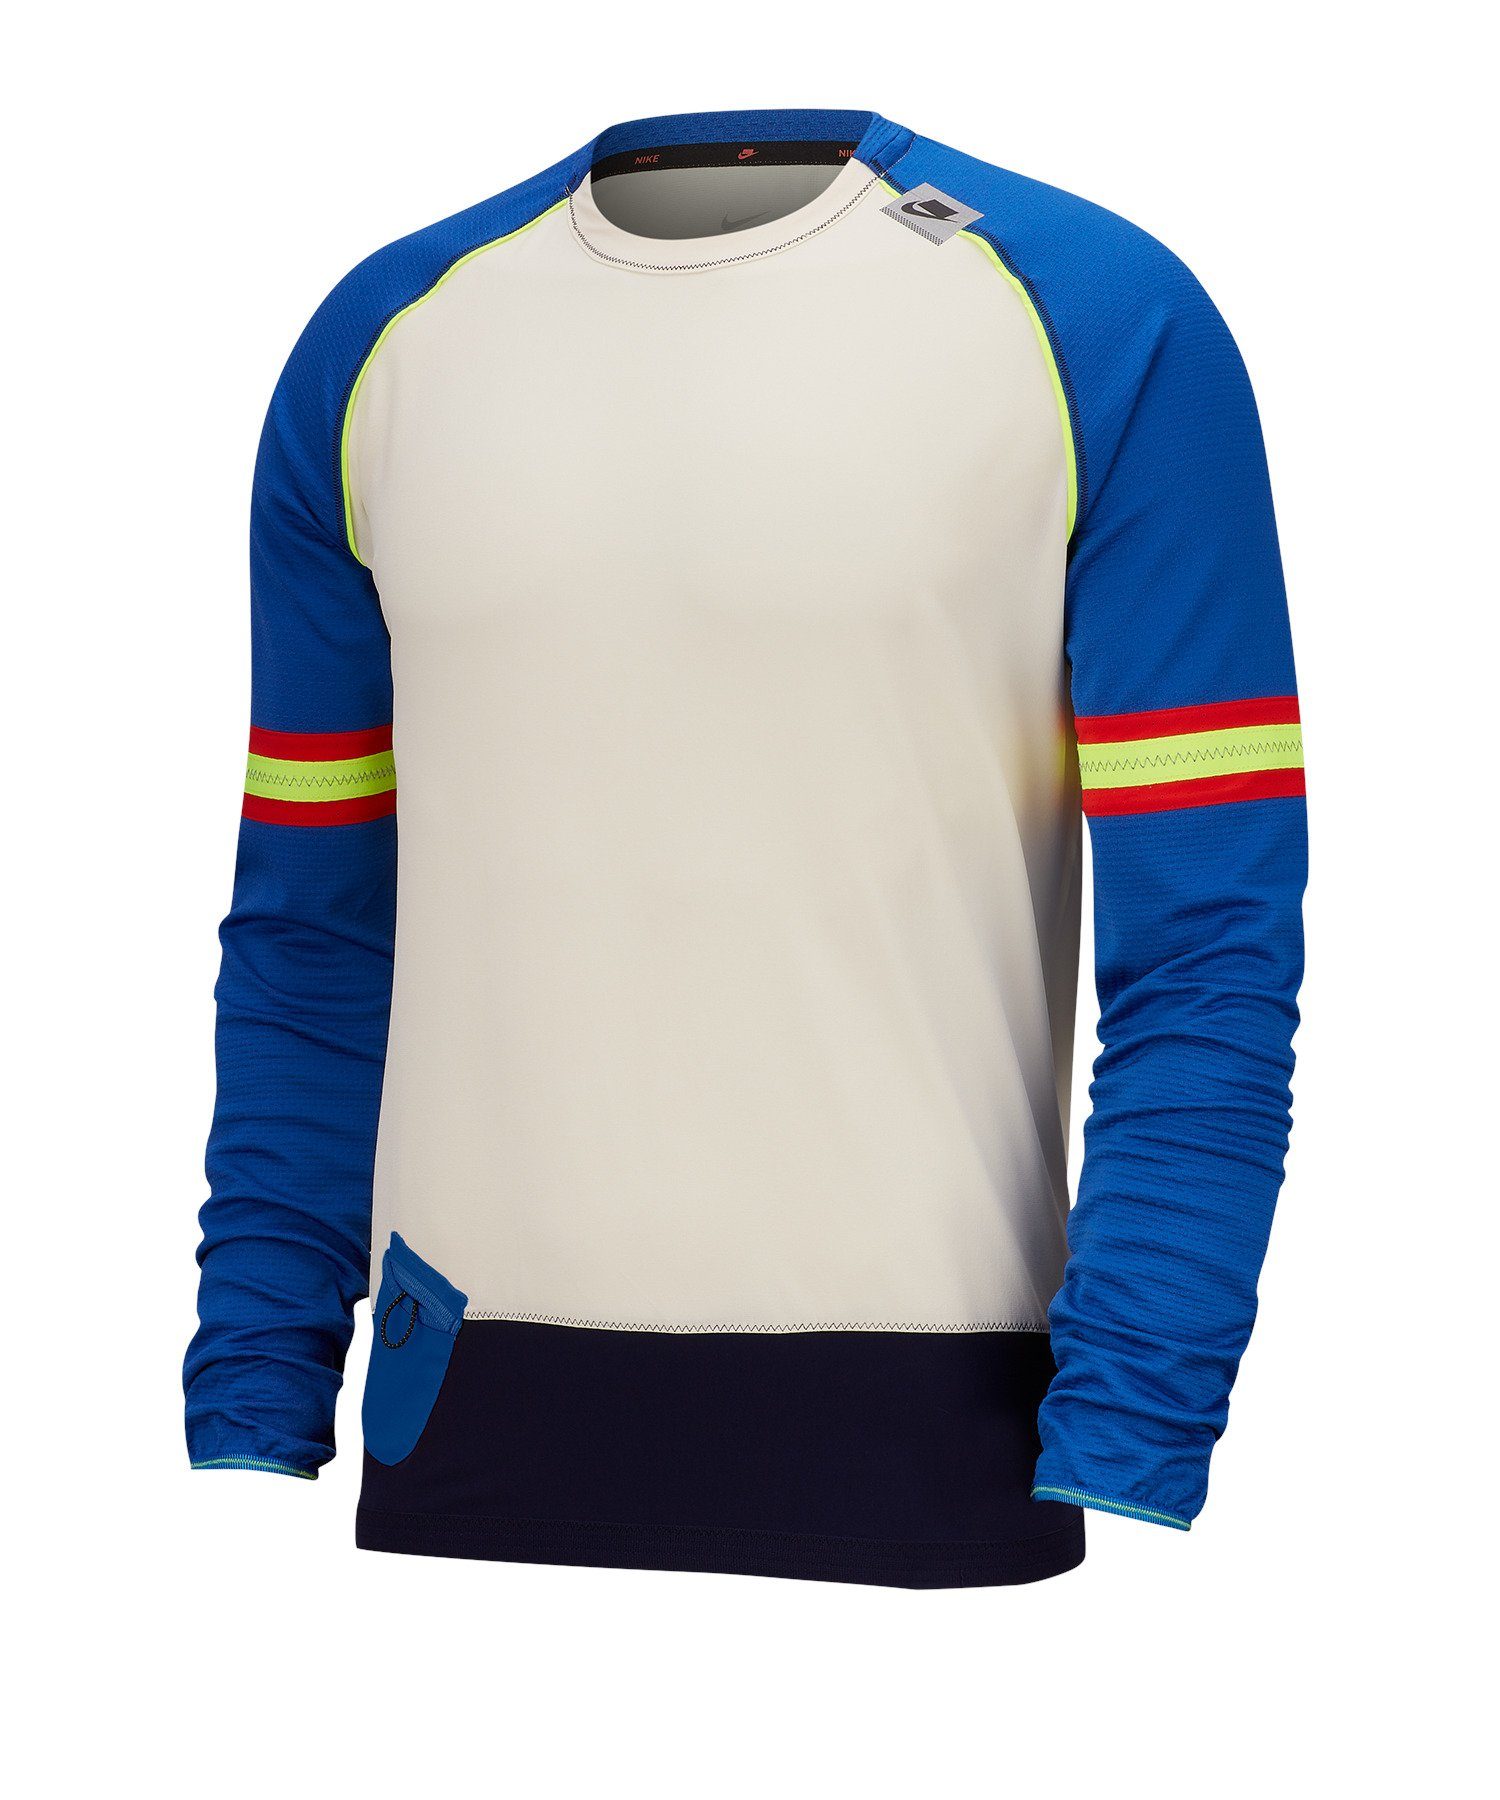 Long-Sleeve Running langarm Top Nike T-Shirt weissblau default Lauftop